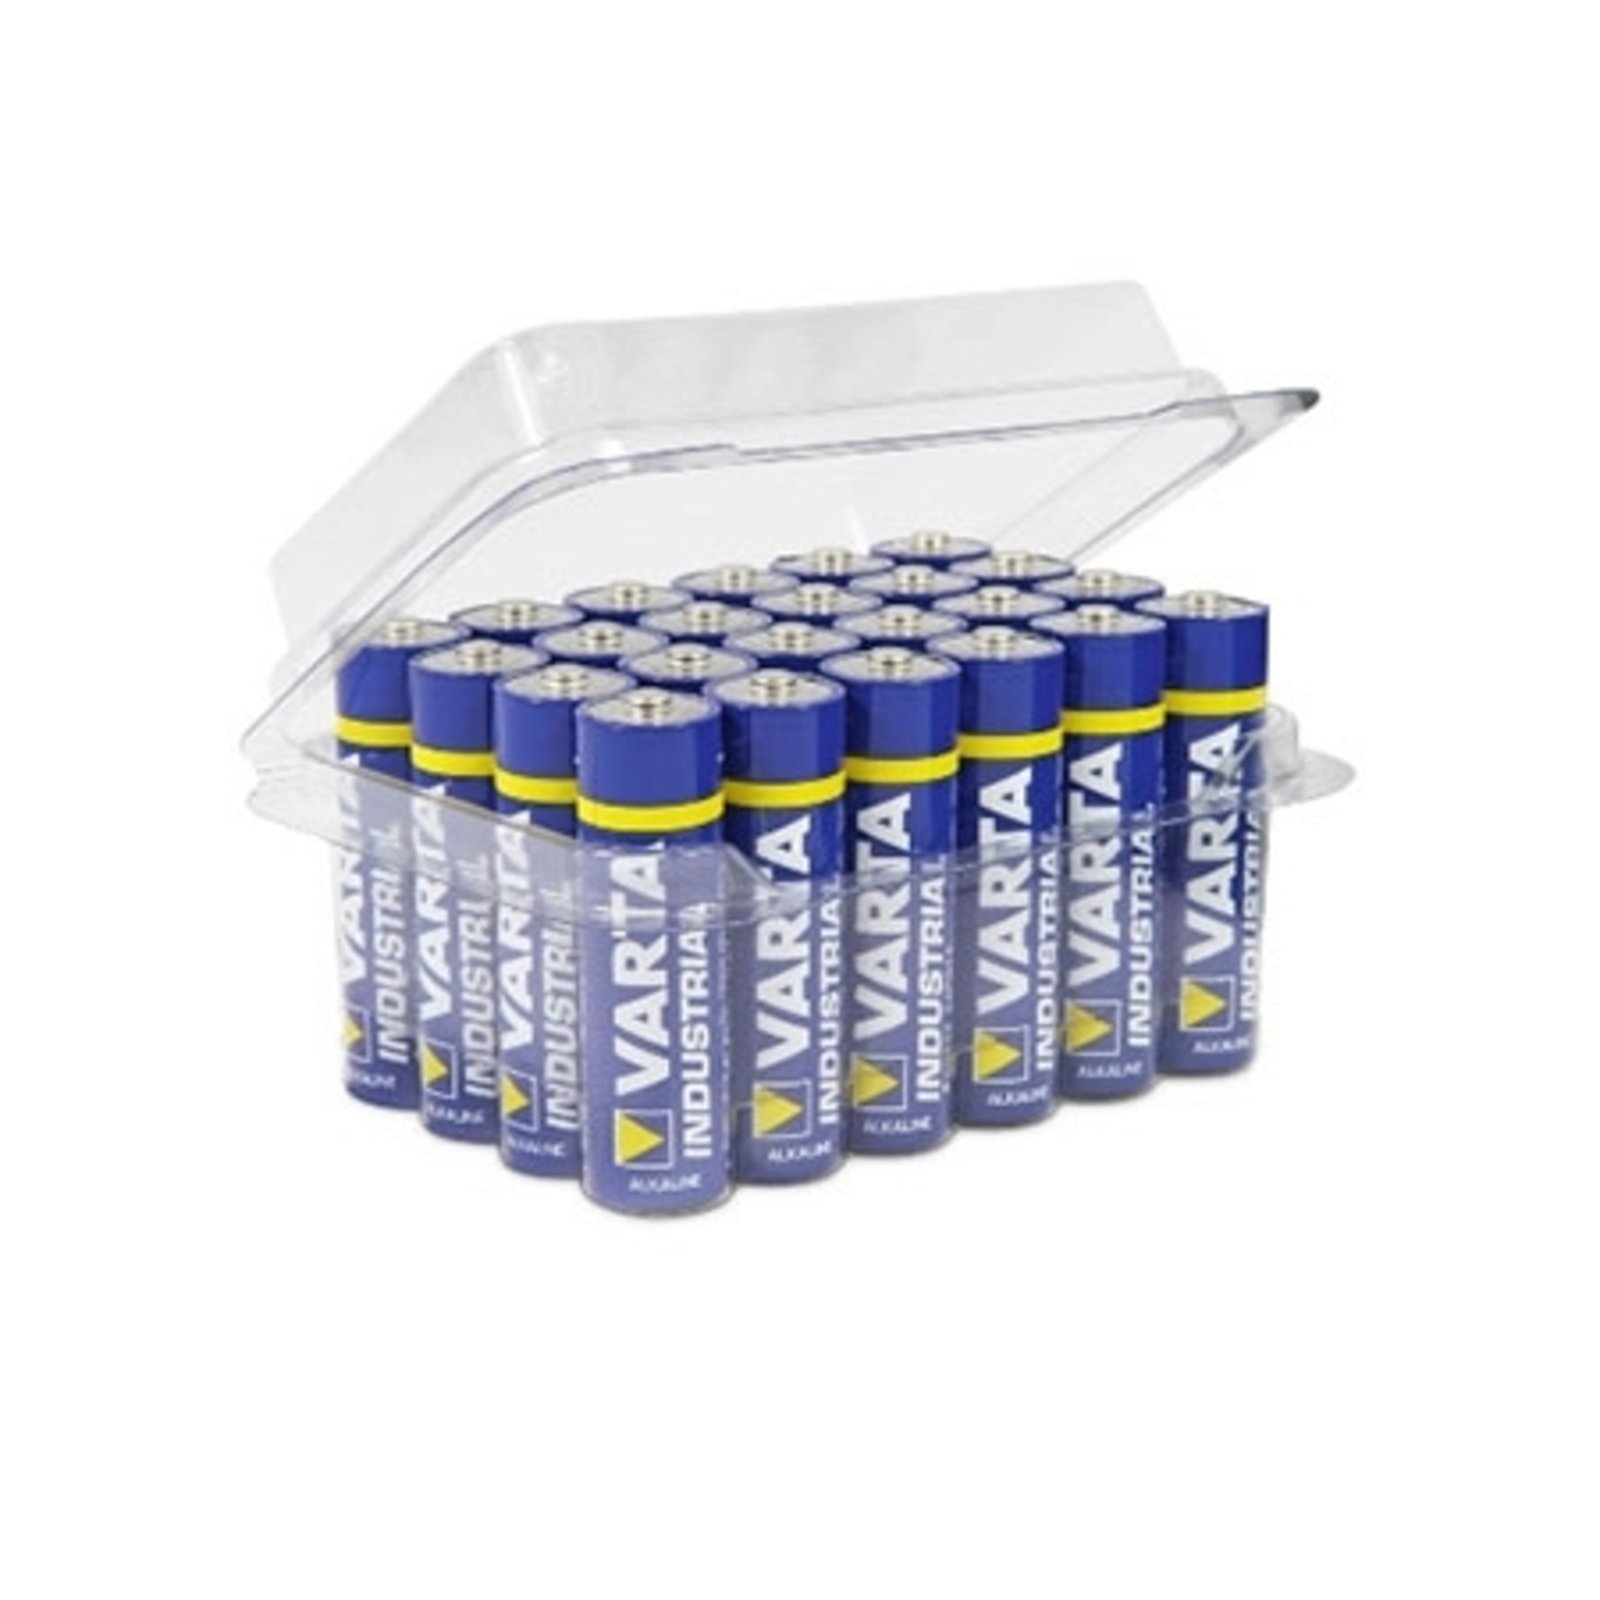 VARTA casing of 24 Mignon AA batteries